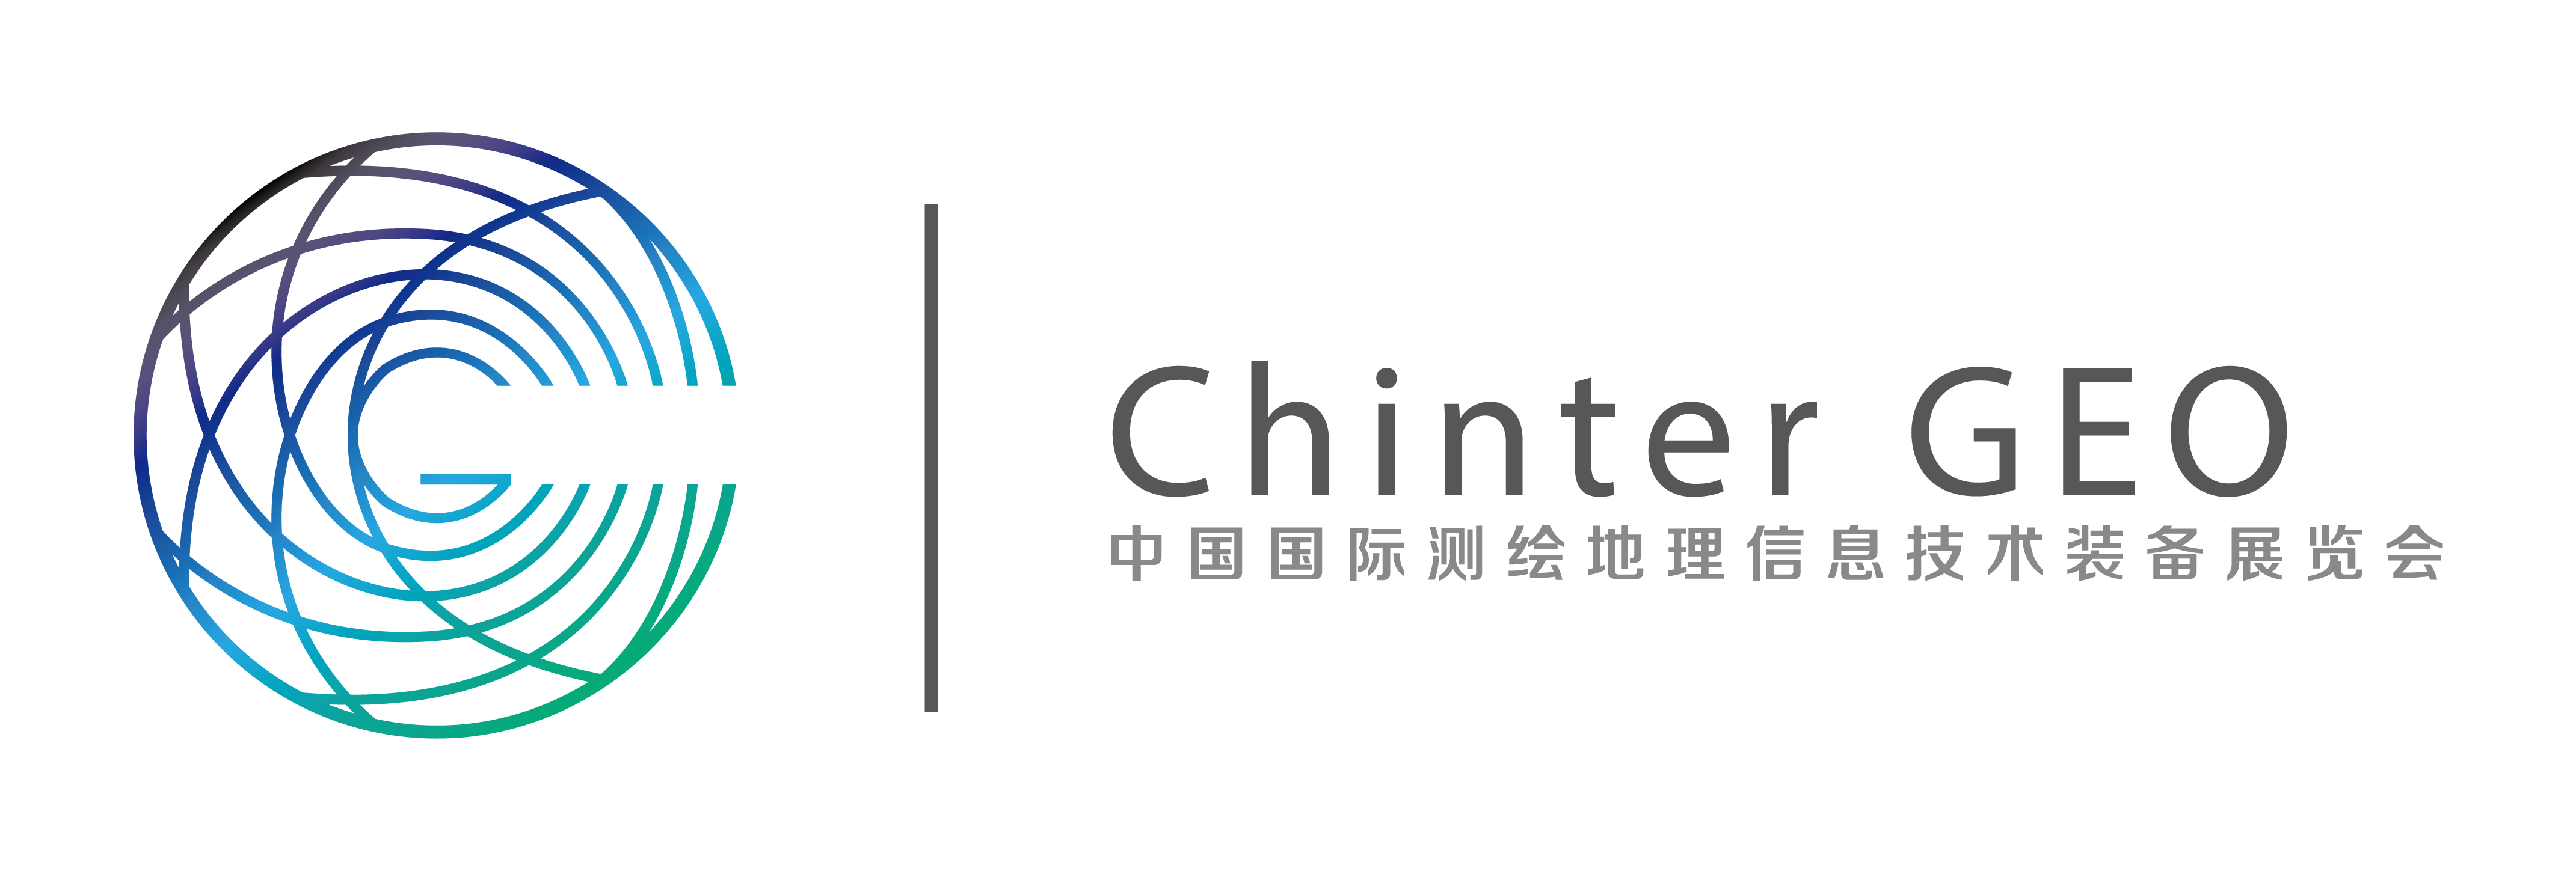 ChinterGEO 2015中国测绘地理信息技术装备展览会